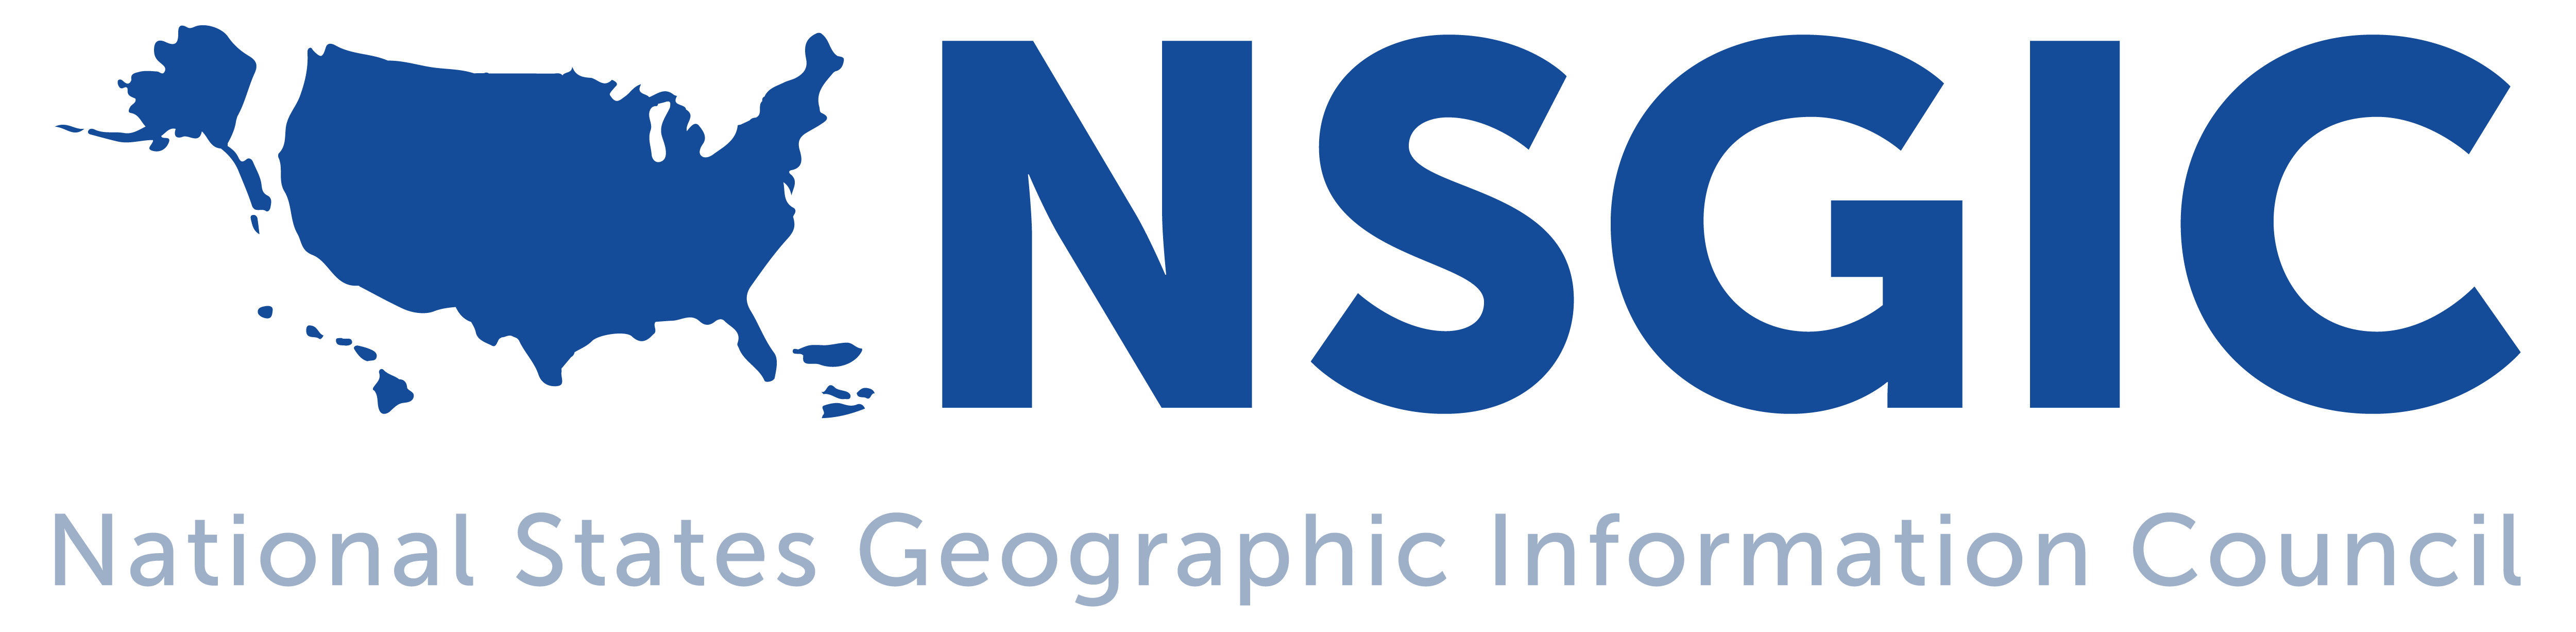 NSGIC Logo